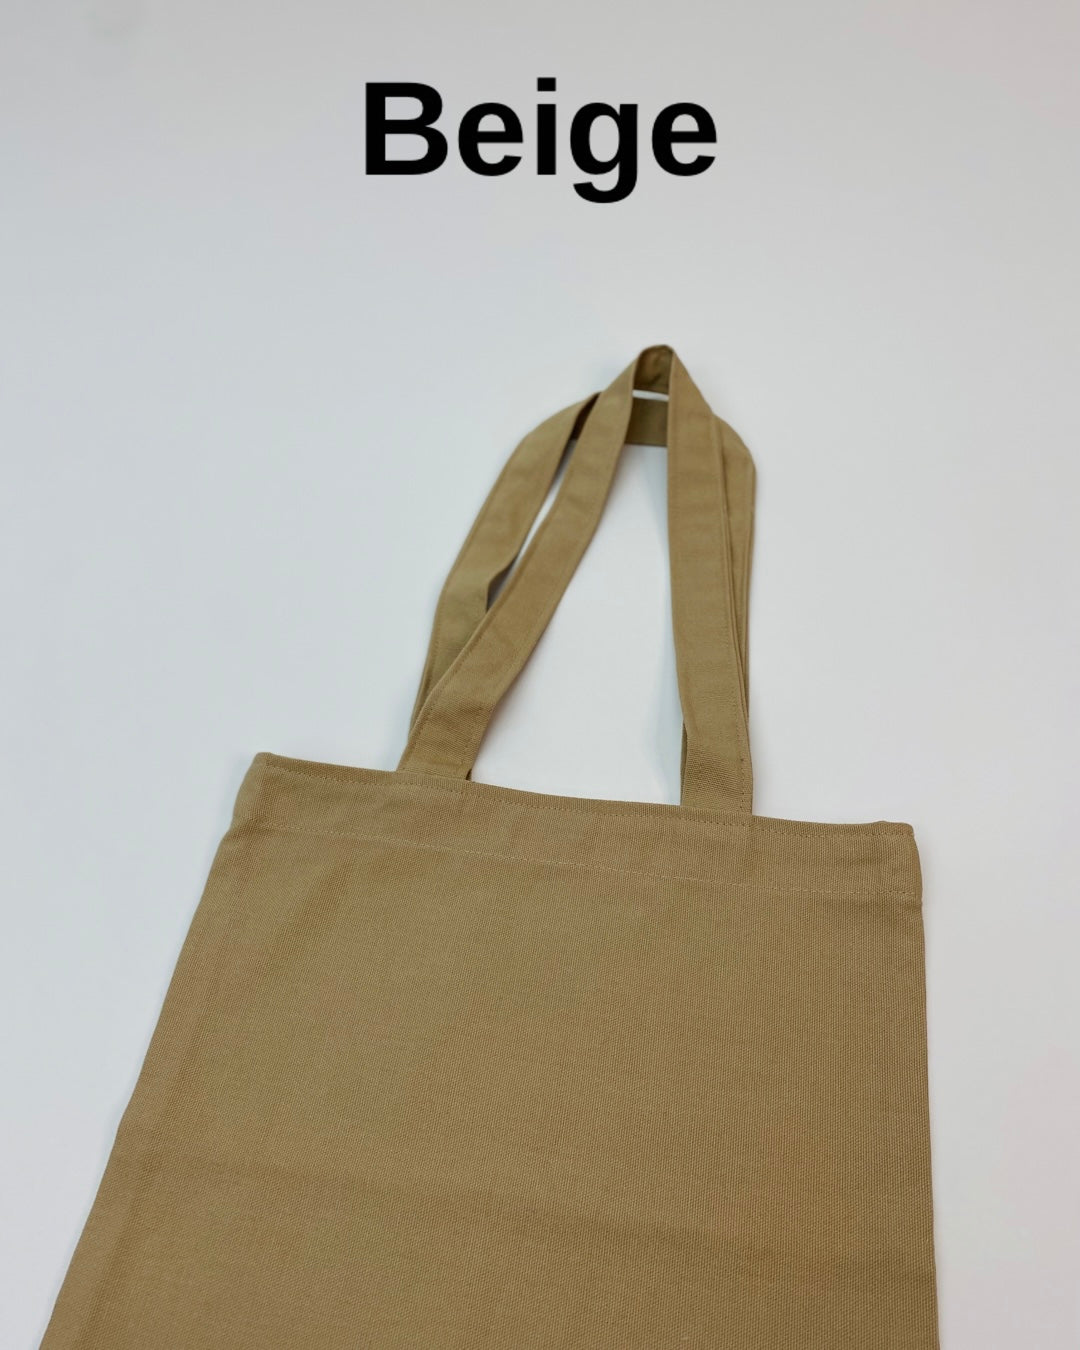 Tote Bag Letra - PERLA, NEGRO, BEIGE